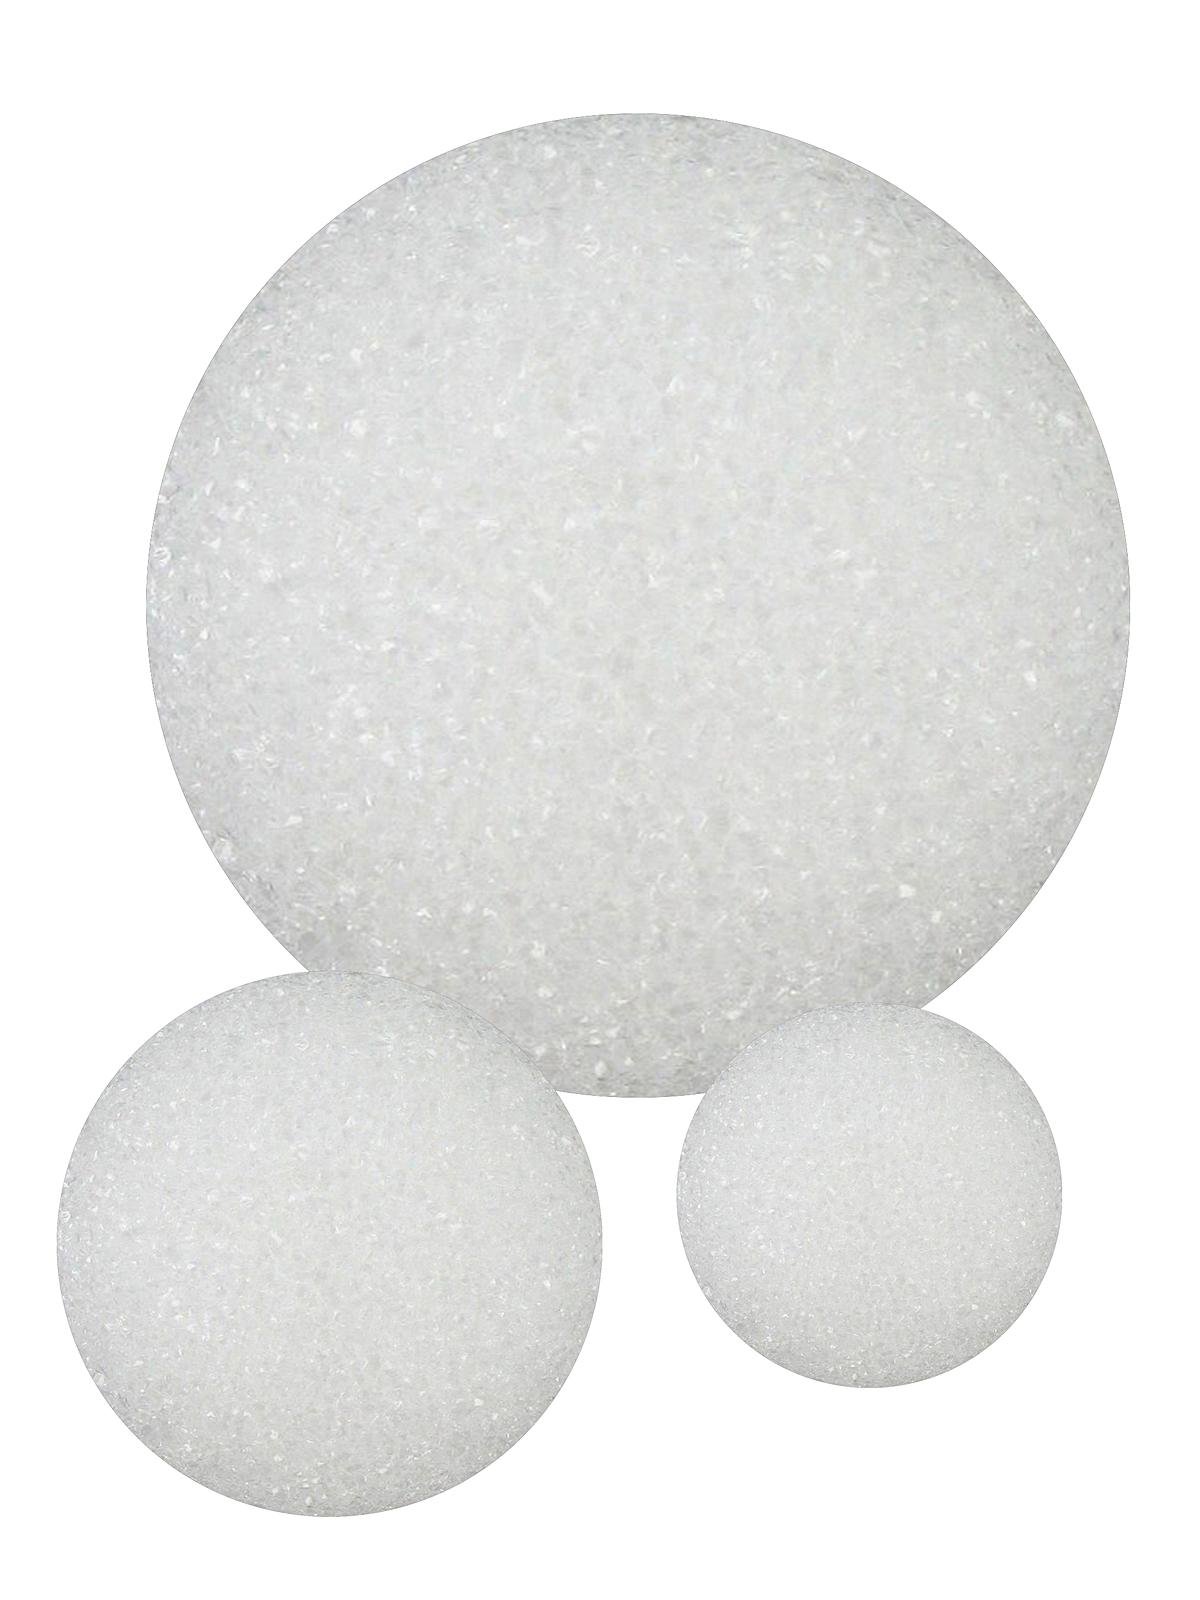 FloraCraft - Styrofoam Snowballs